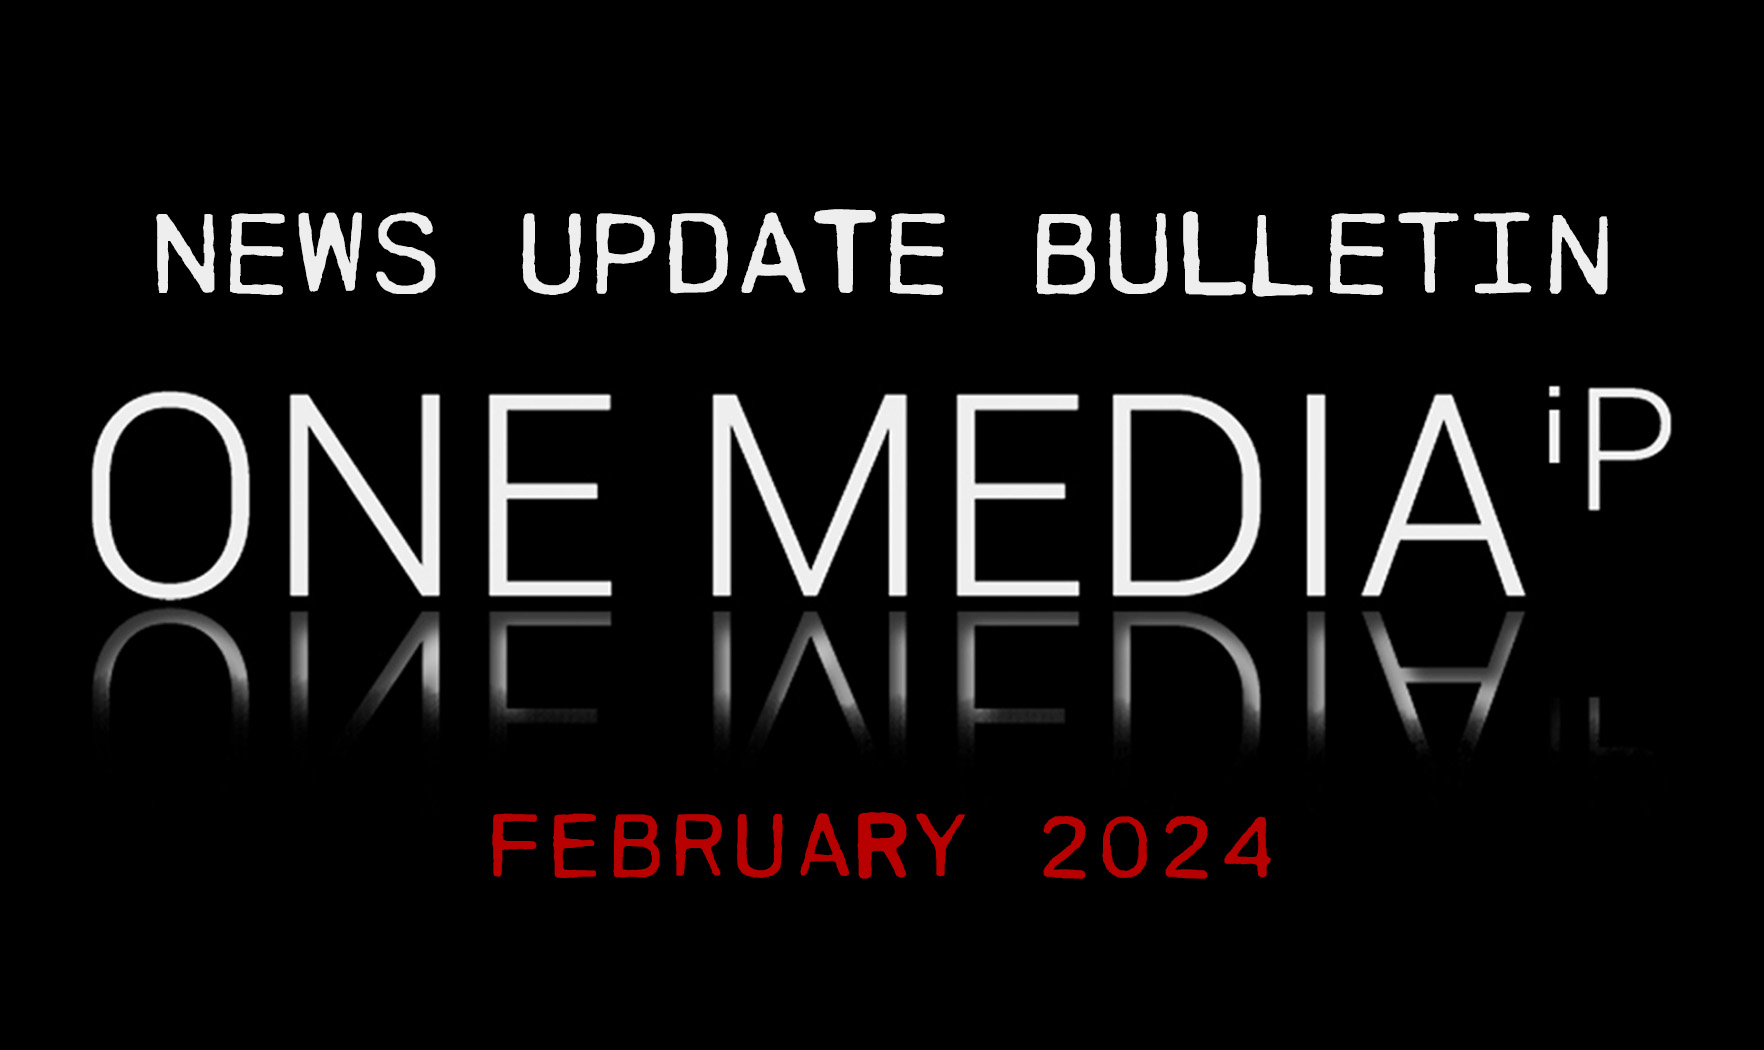 News Update Bulletin February 2024